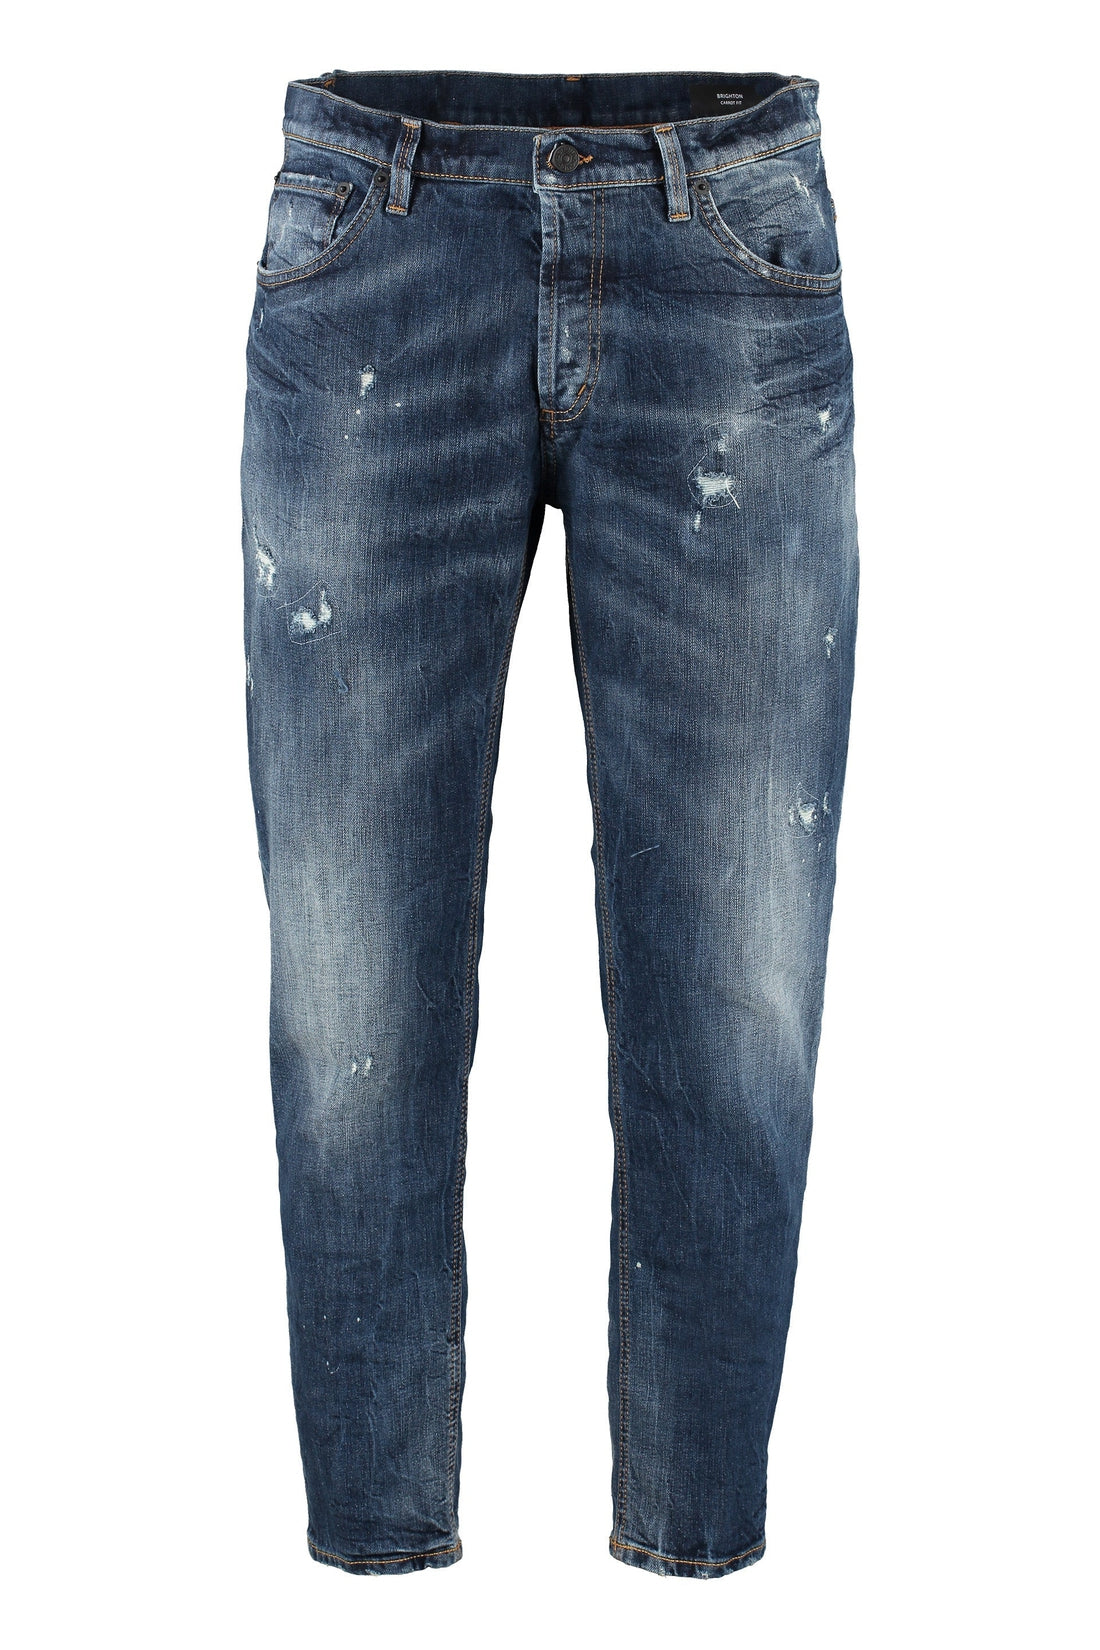 Dondup-OUTLET-SALE-Brighton 5-pocket jeans-ARCHIVIST